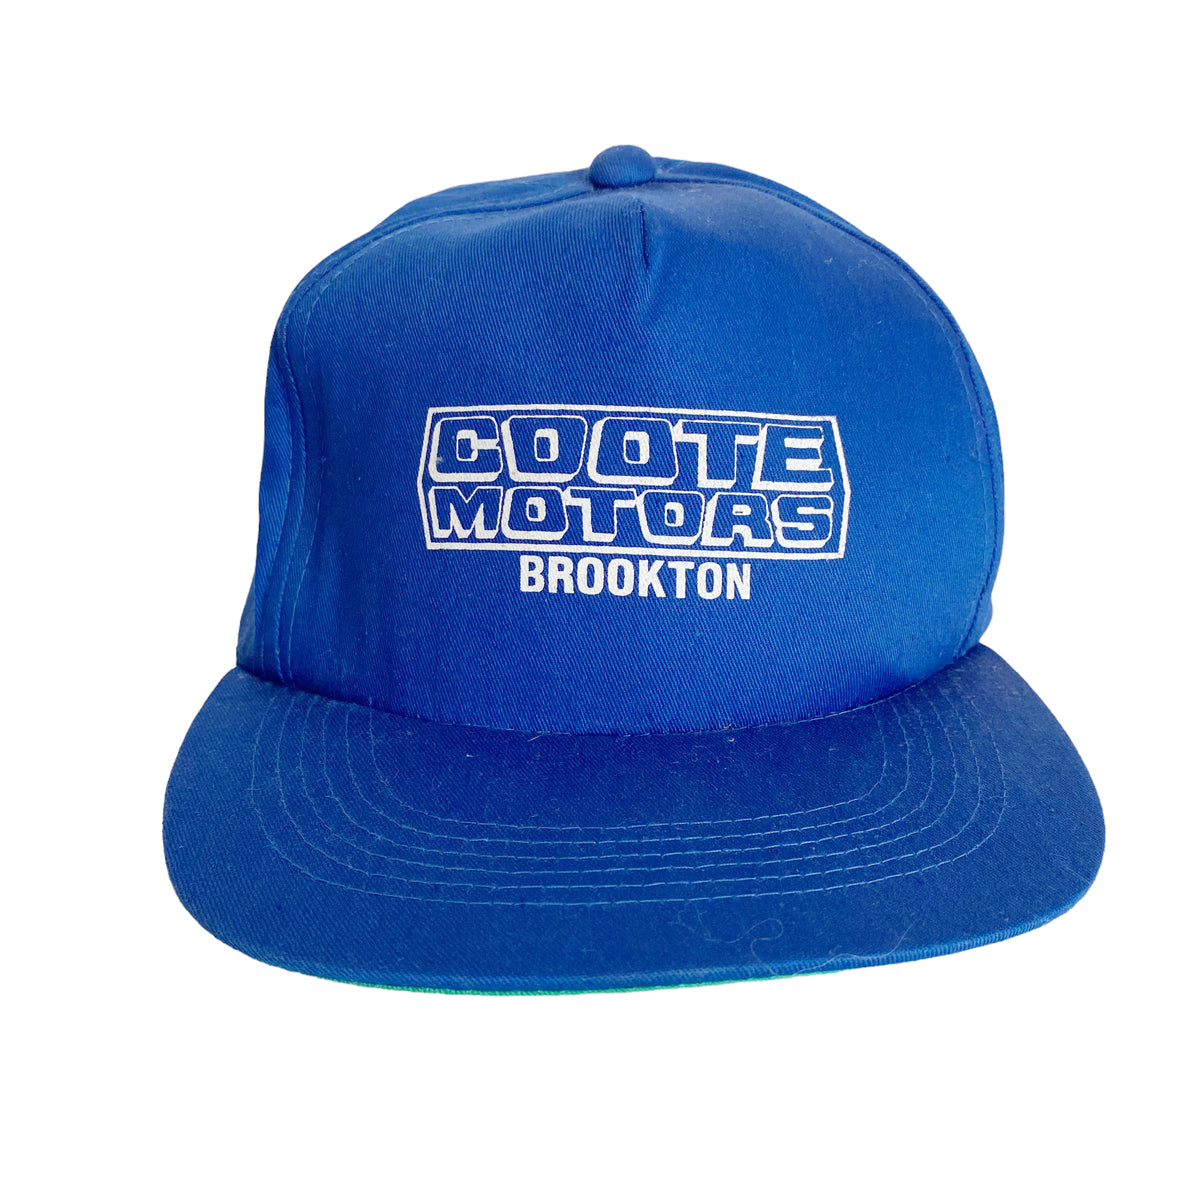 Coote Motors Brookton Vintage Mens Snapback Hat